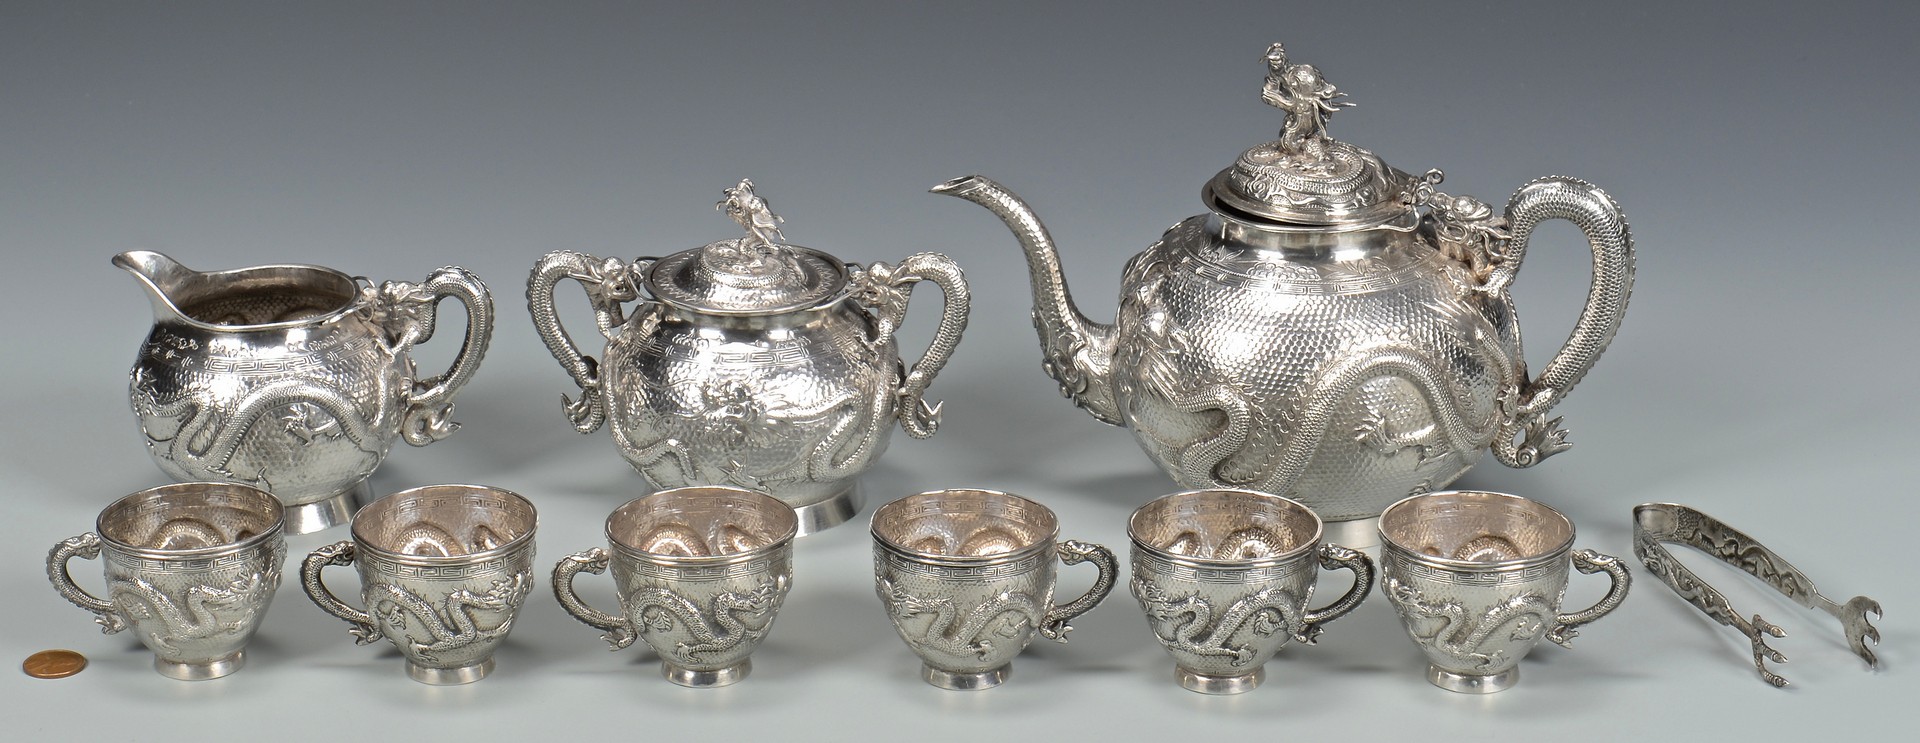 Lot 3: Chinese Export Silver Tea Set, 10 pcs